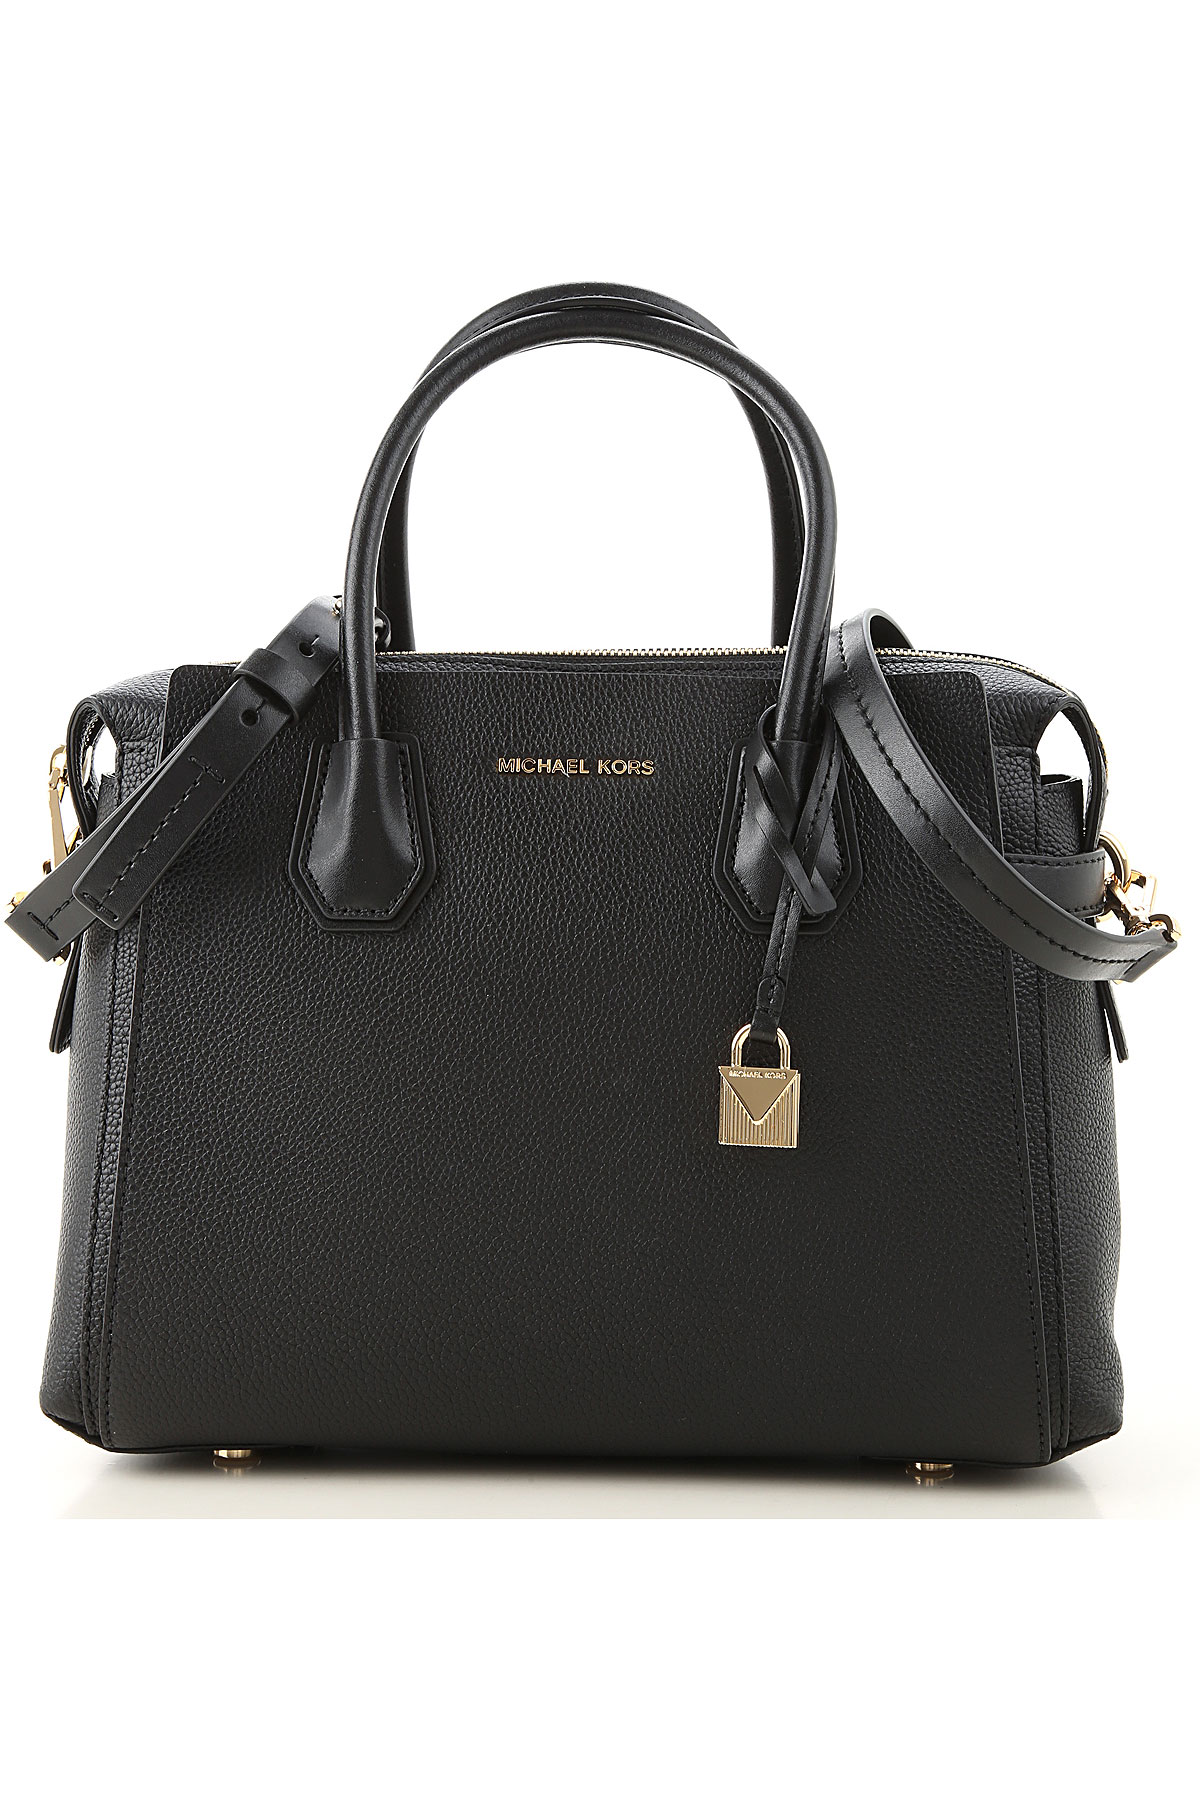 Handbags Michael Kors, Style code: 30s9gm9s2l-001-